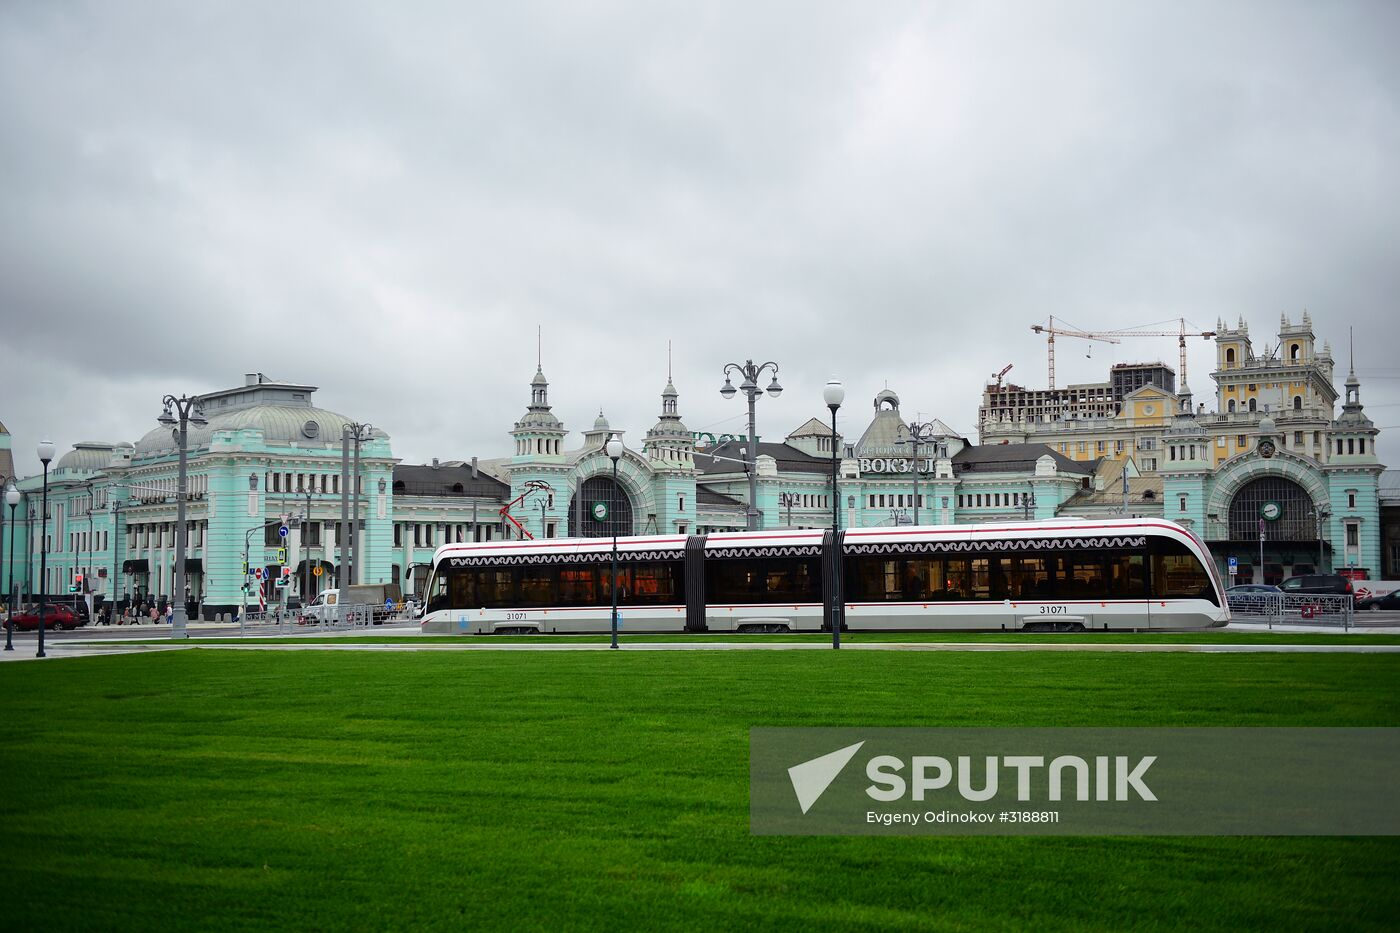 Streetcar traffic launched on Tverskaya Zastava Square